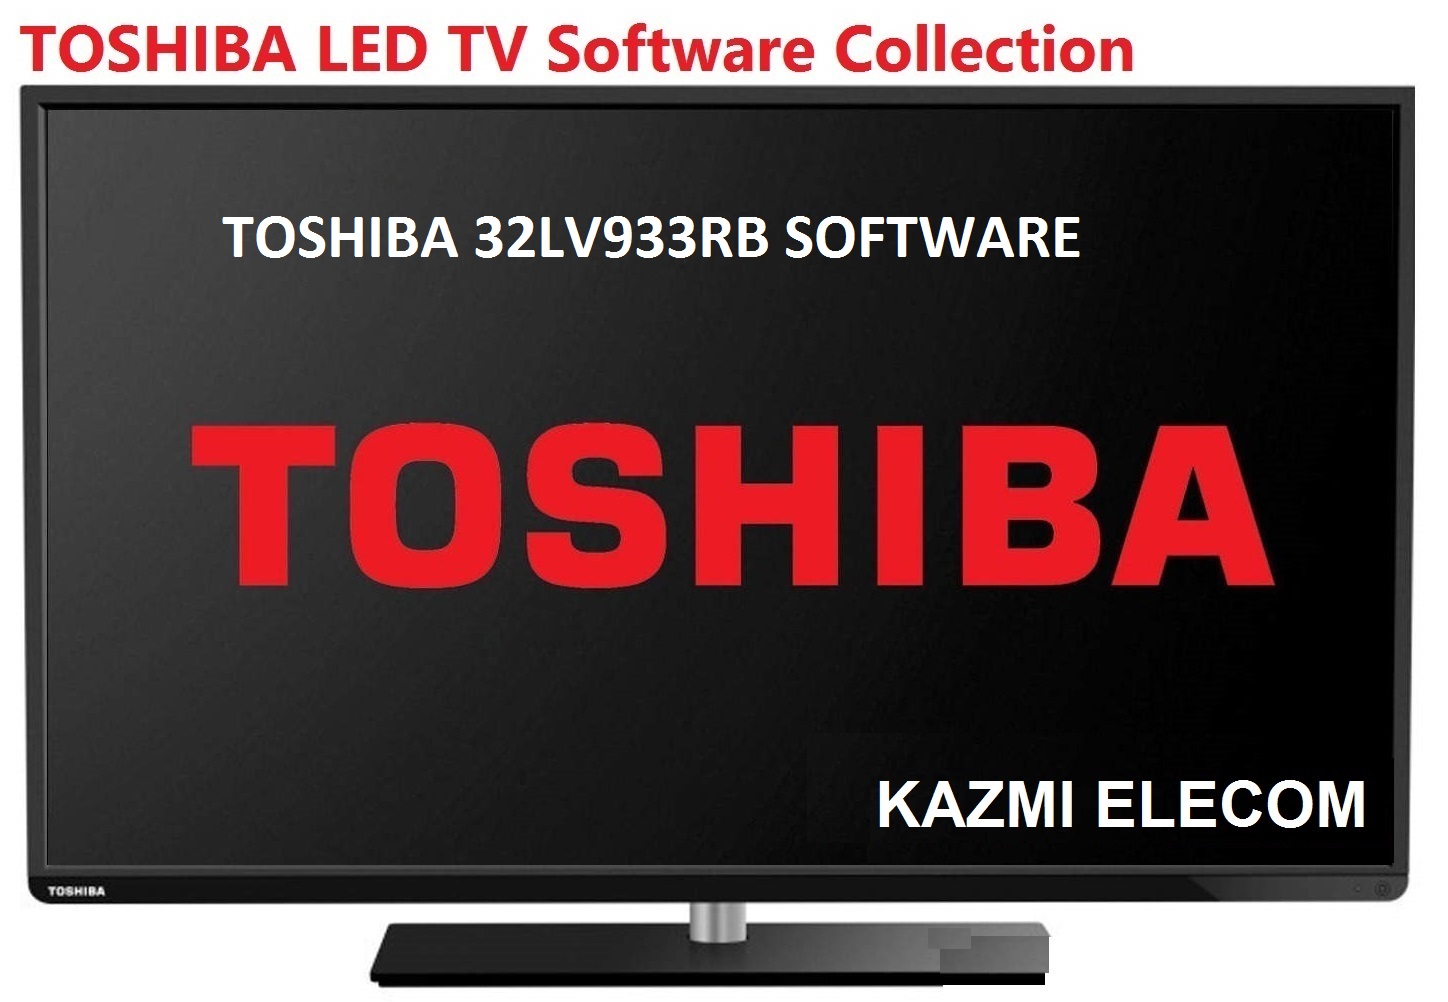 Toshiba 32Lv933Rb